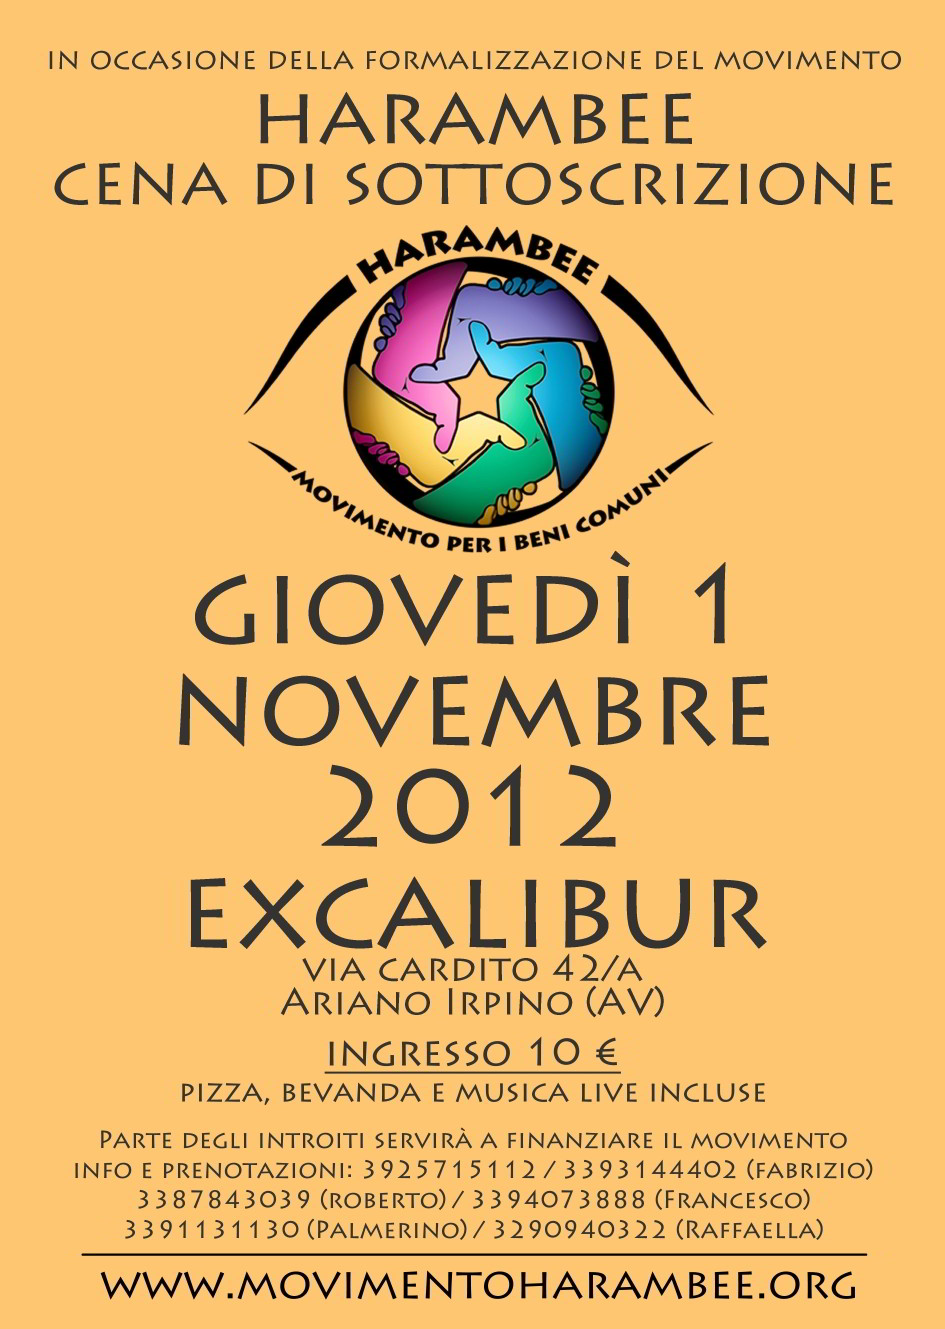 locandina cena harambee sottoscrizione excalibur 1 nov 2012